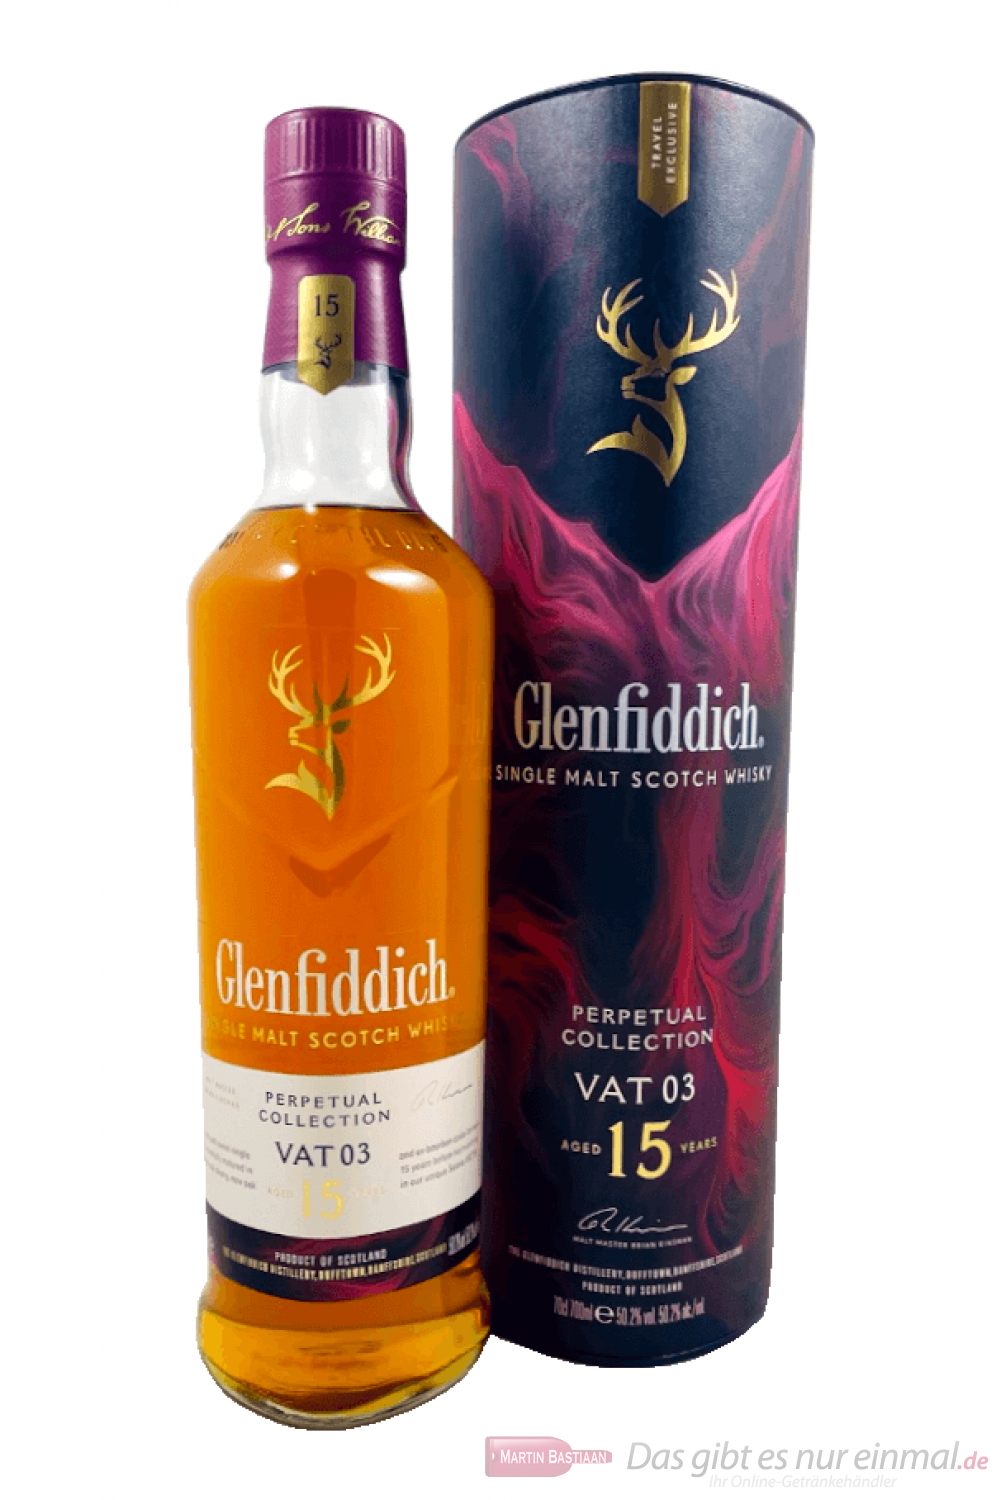 Glenfiddich Perpetual Collection Vat 3 Single Malt Scotch Whisky 0,7l